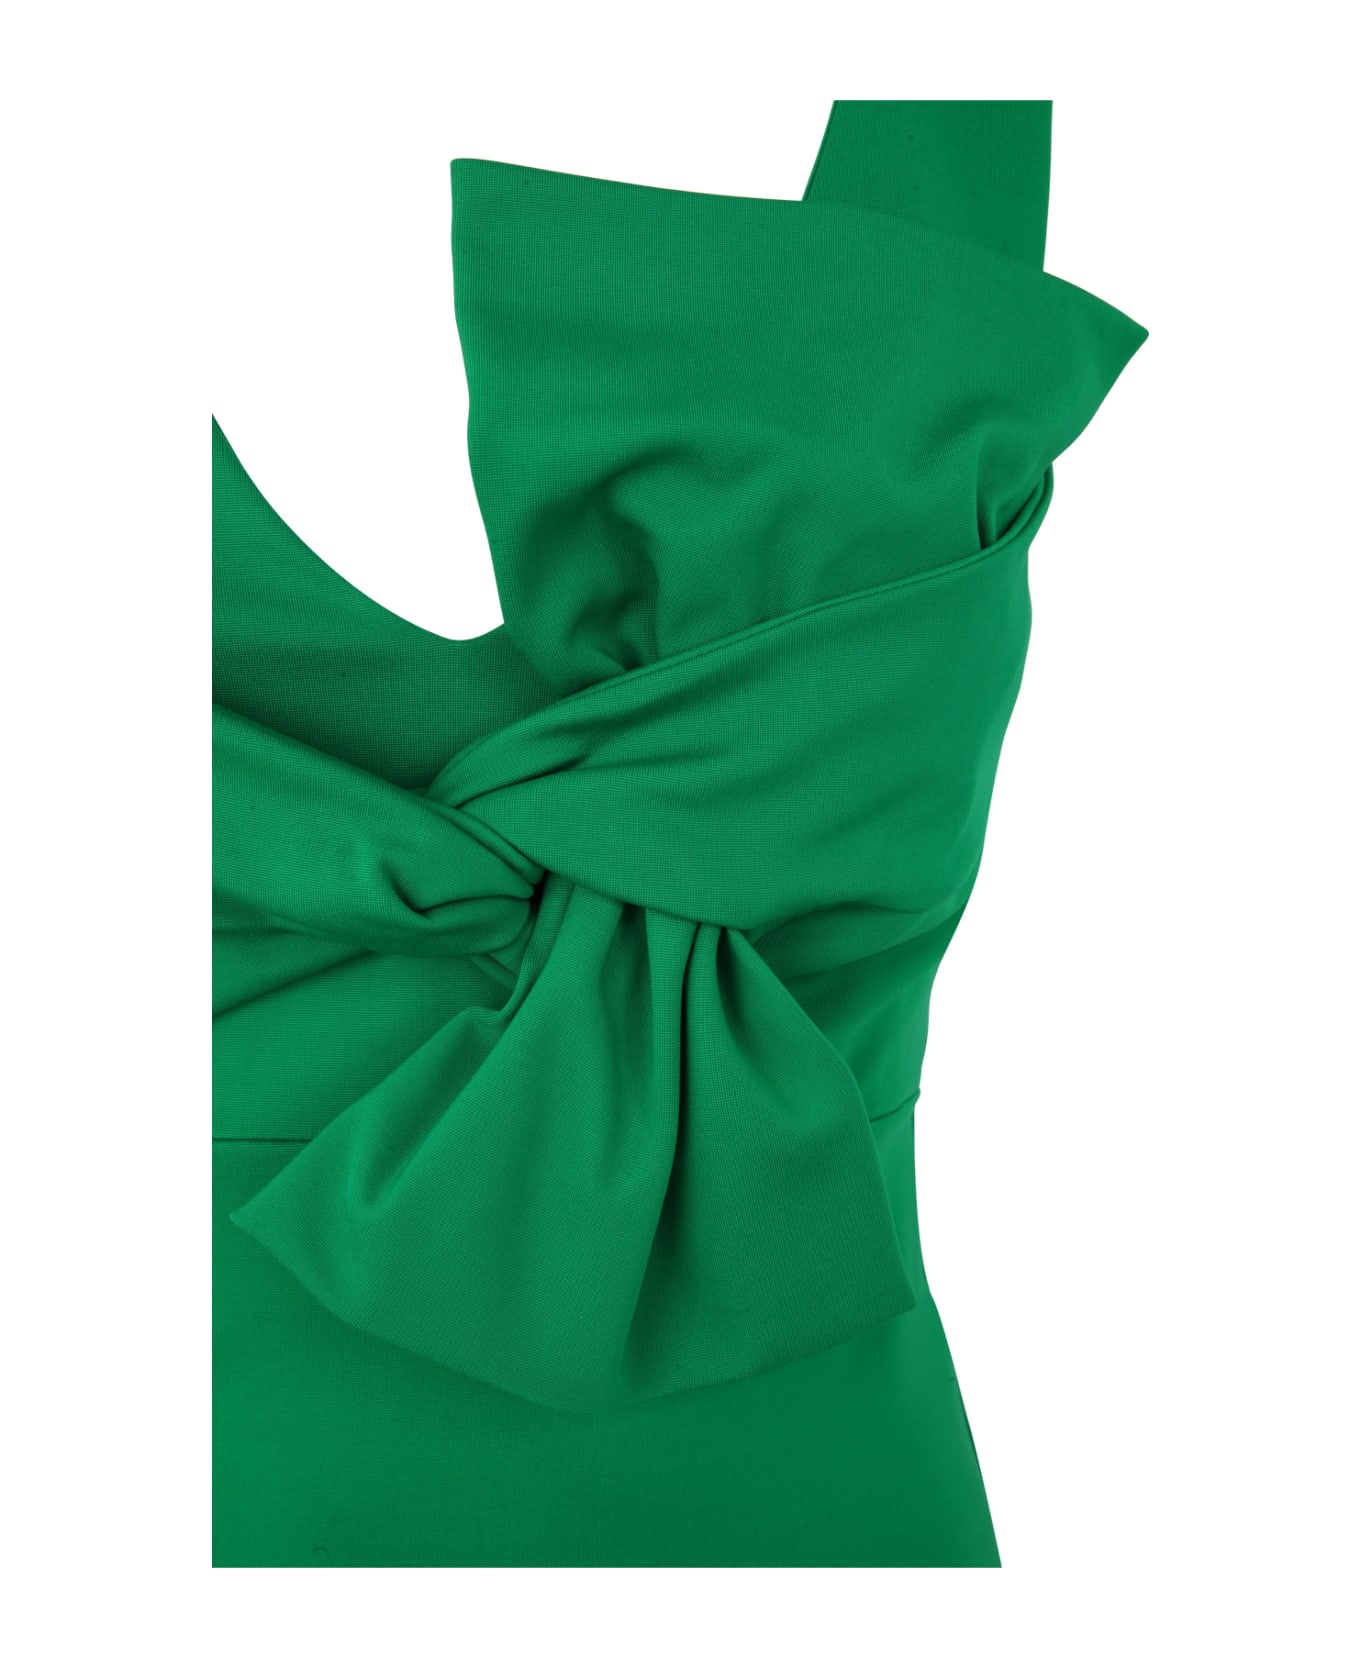 Parosh Punto Milano Dress - Emerald Green